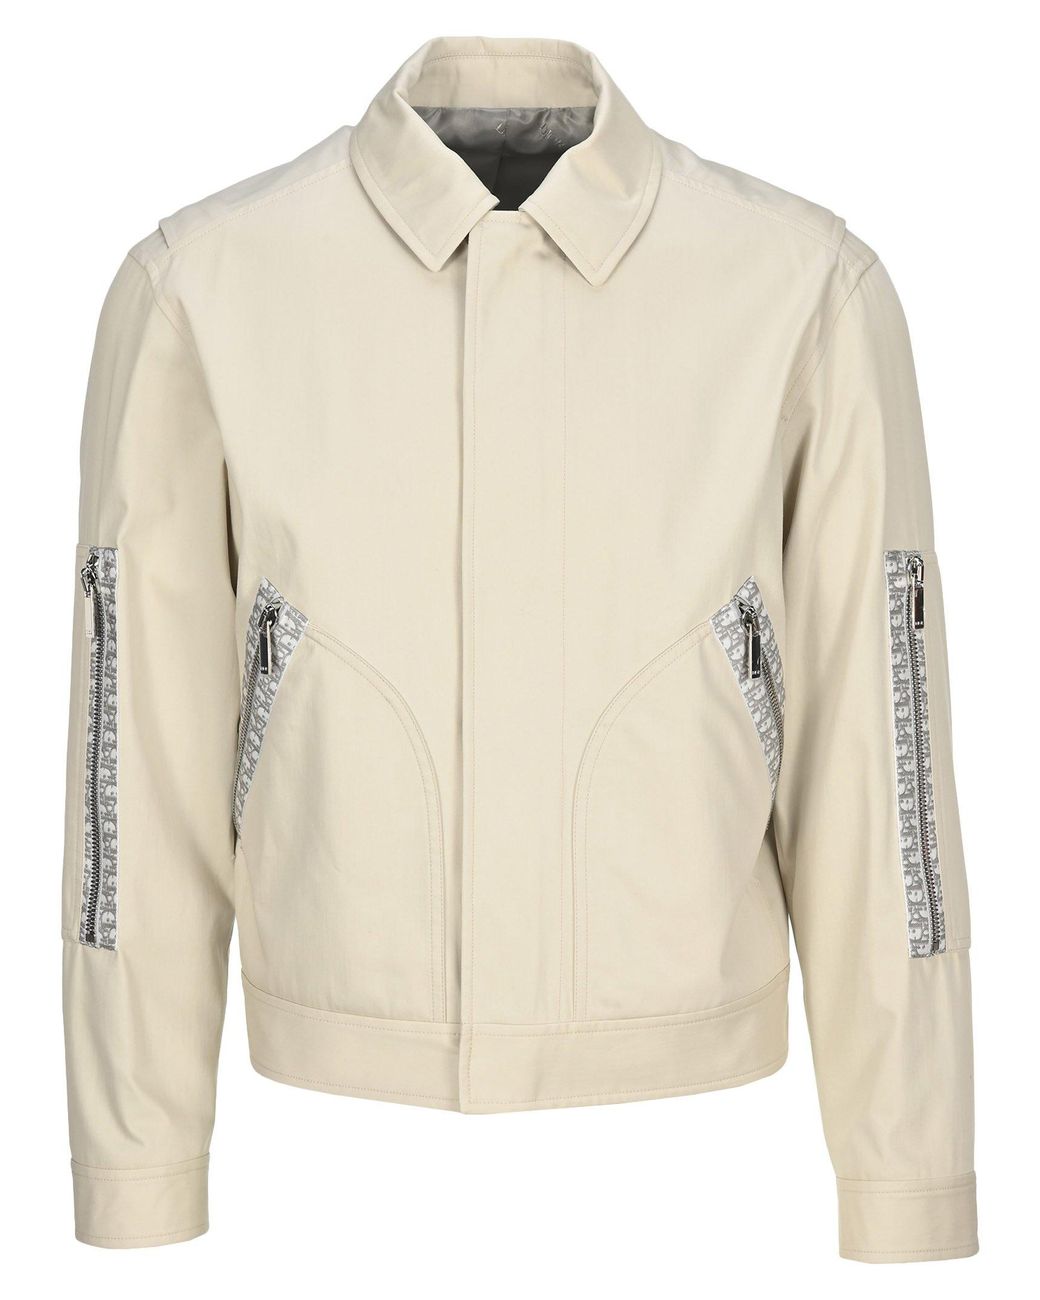 Dior Cotton Oblique Jacquard Trim Jacket in Beige (Natural) for Men - Lyst